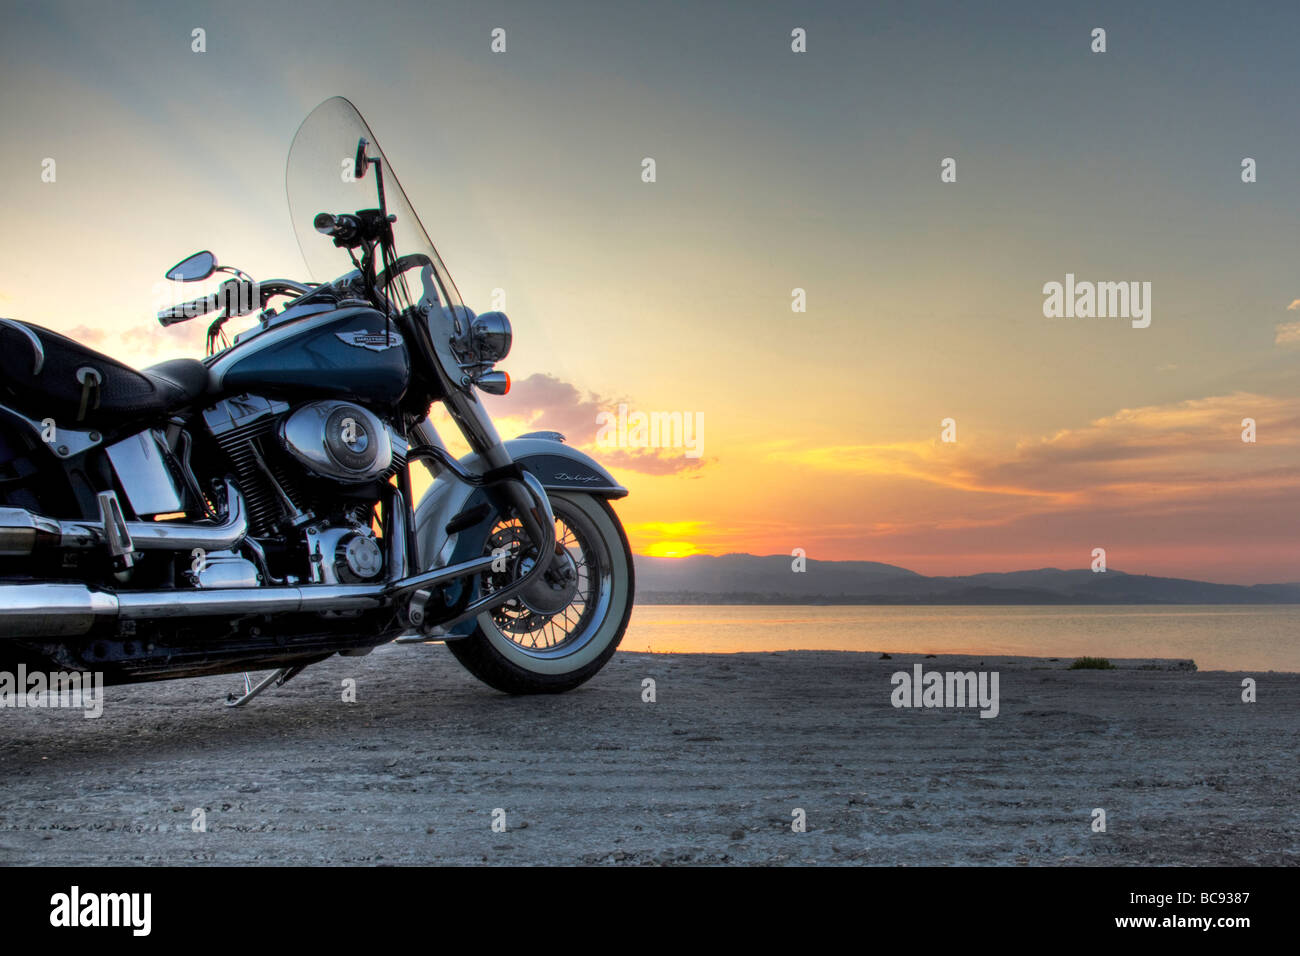 Une Harley Davidson moto Moto prendre au coucher du soleil au coucher du soleil le jour Banque D'Images